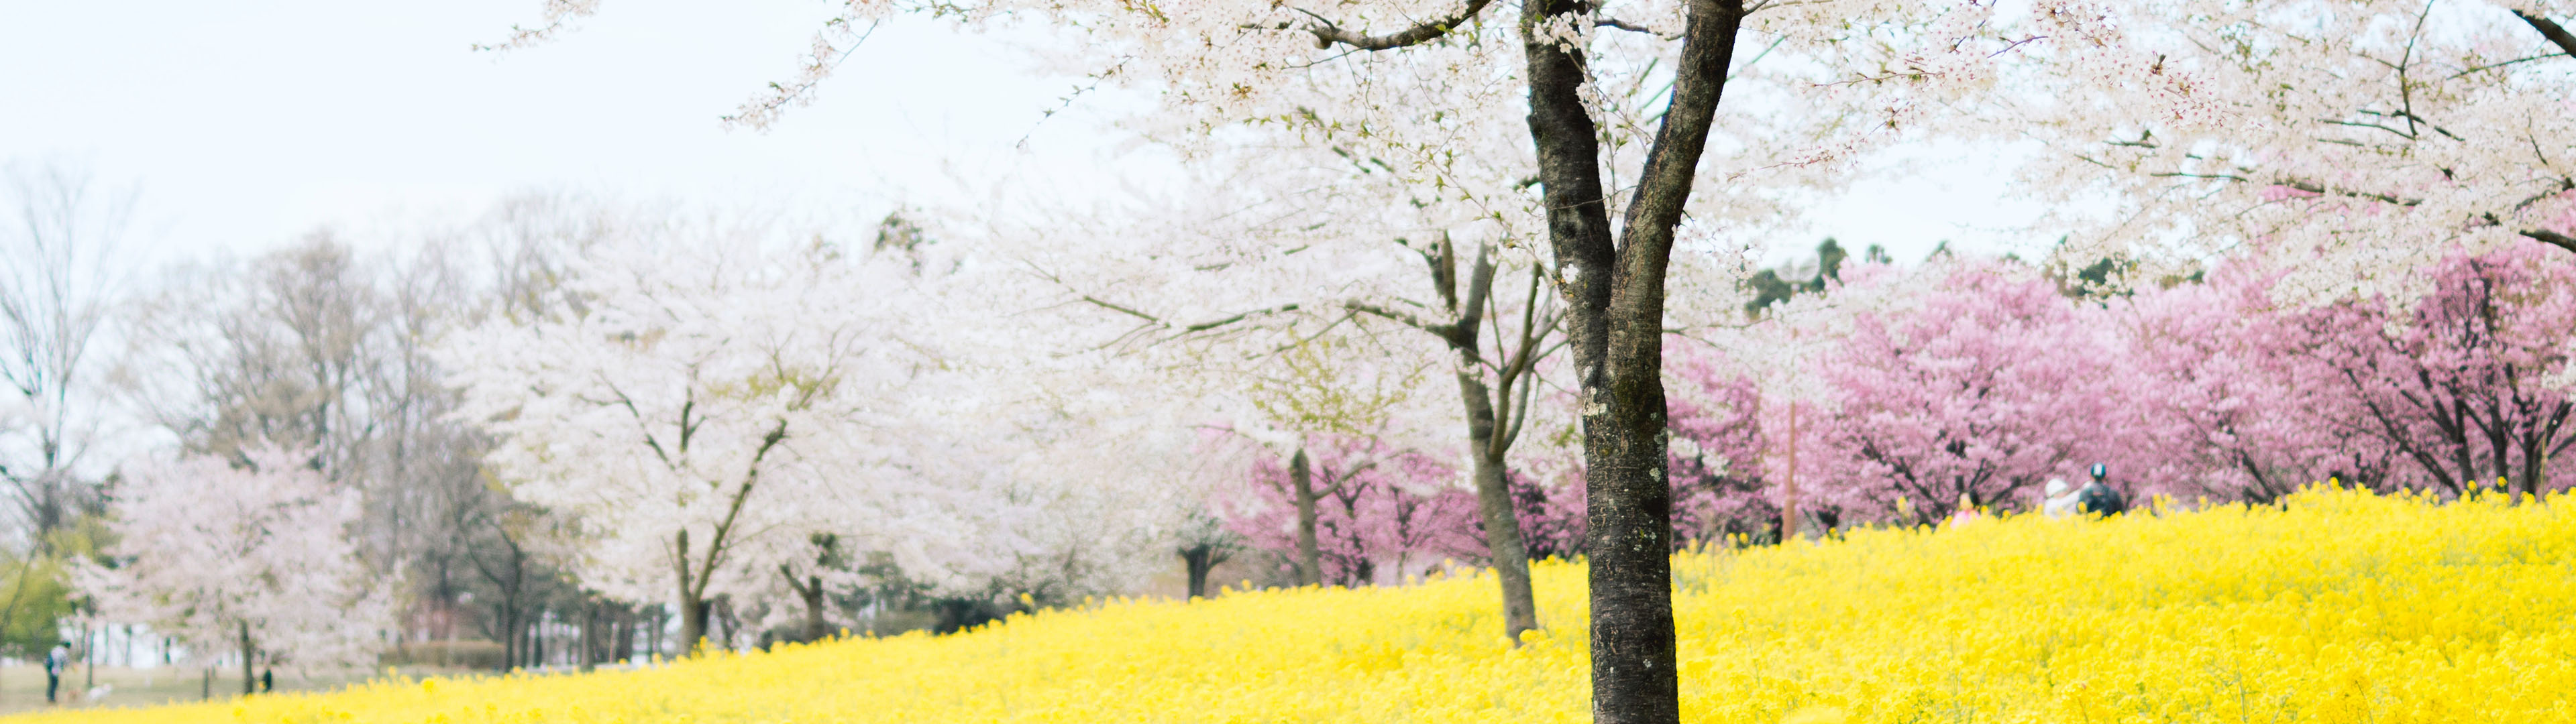 Cherry Blossom Field